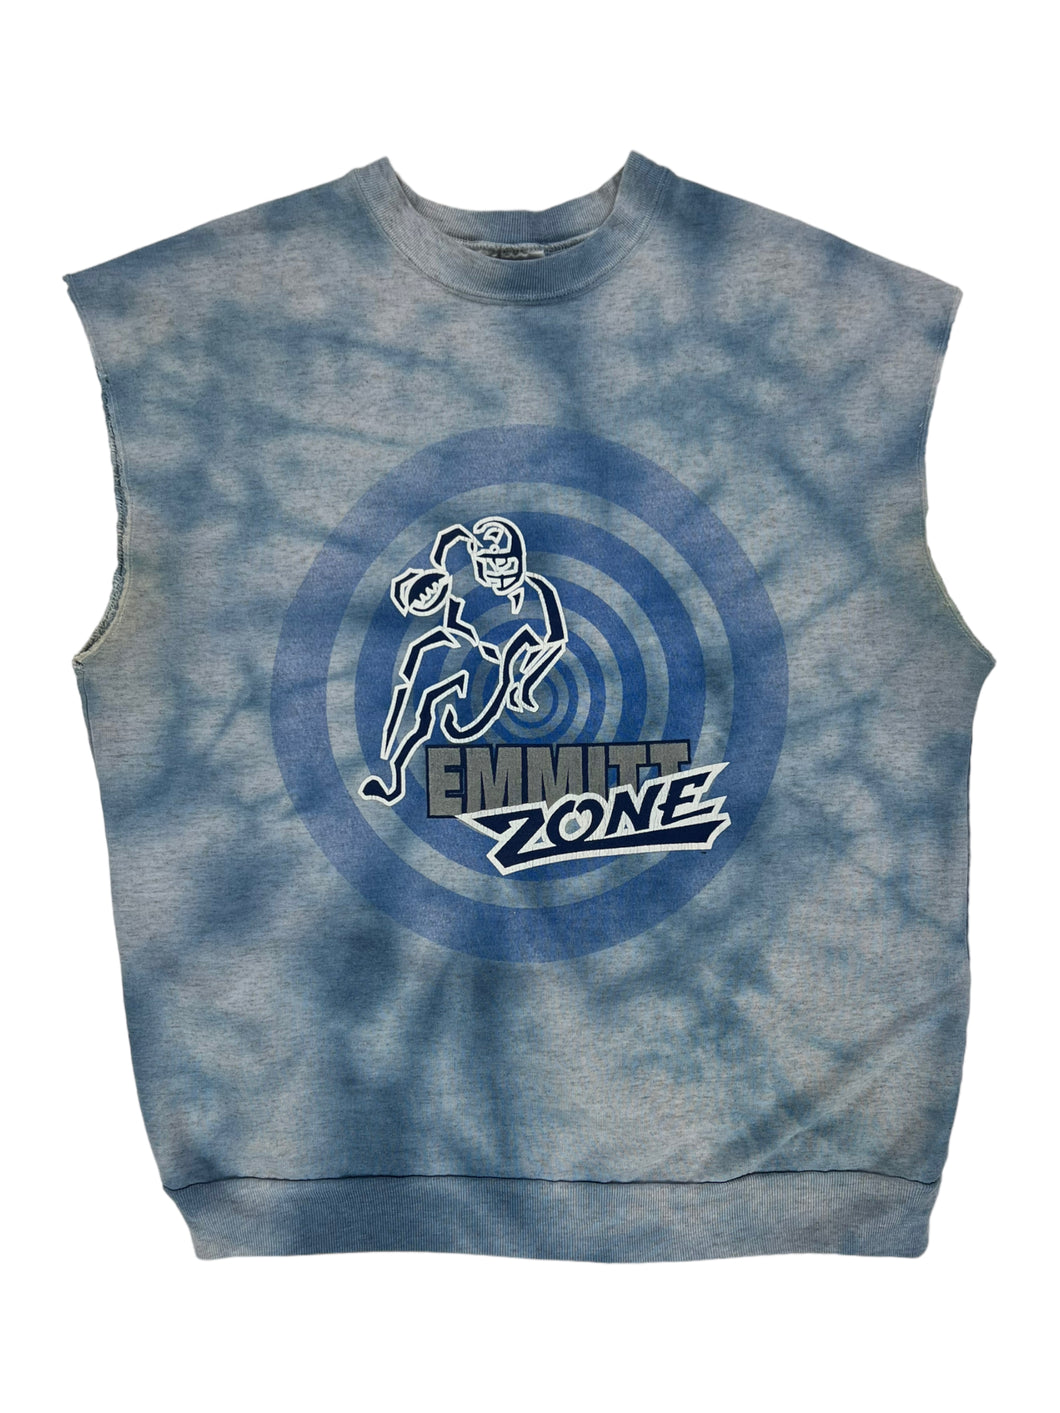 Vintage 90s Starter Dallas Cowboys Emmitt Smith Zone tie dye chopped sweatshirt (XL)